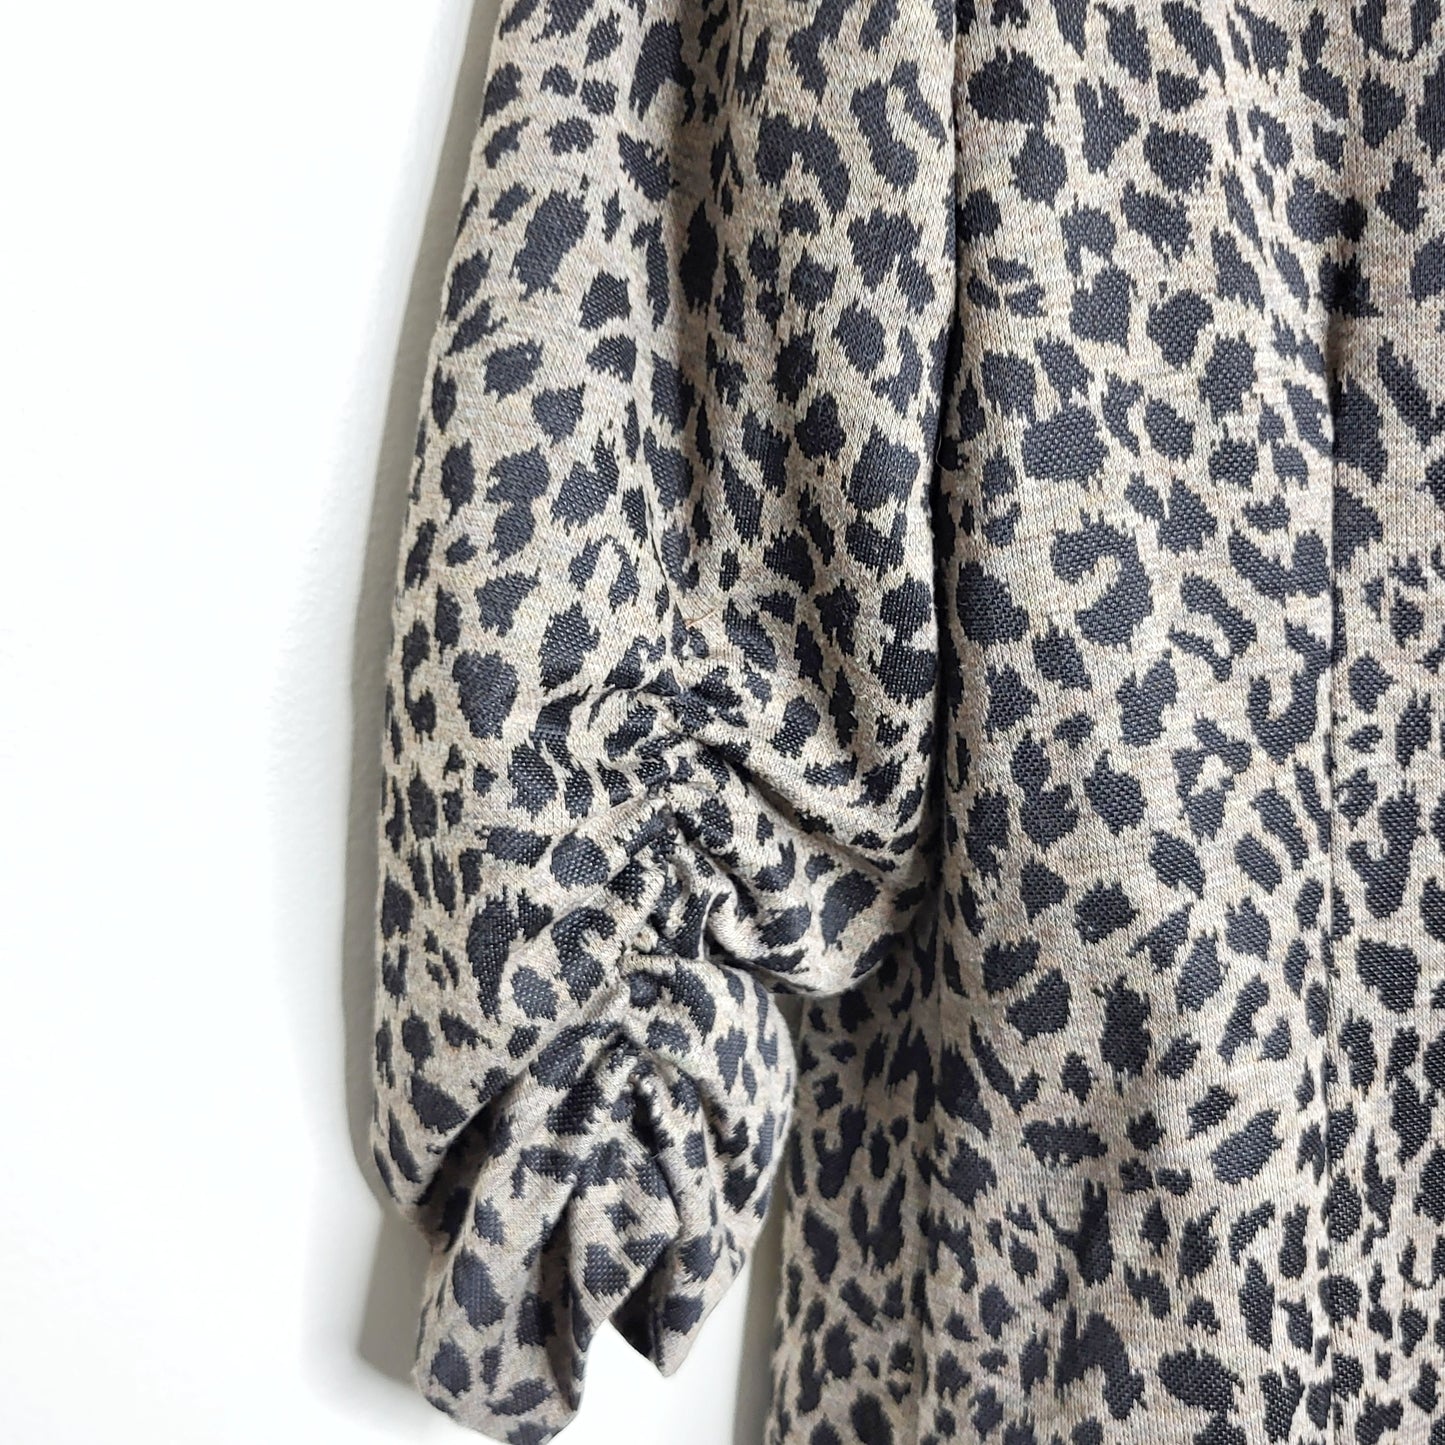 JRB1 - sakura knit leopard print blazer with ruched sleeves. Size medium